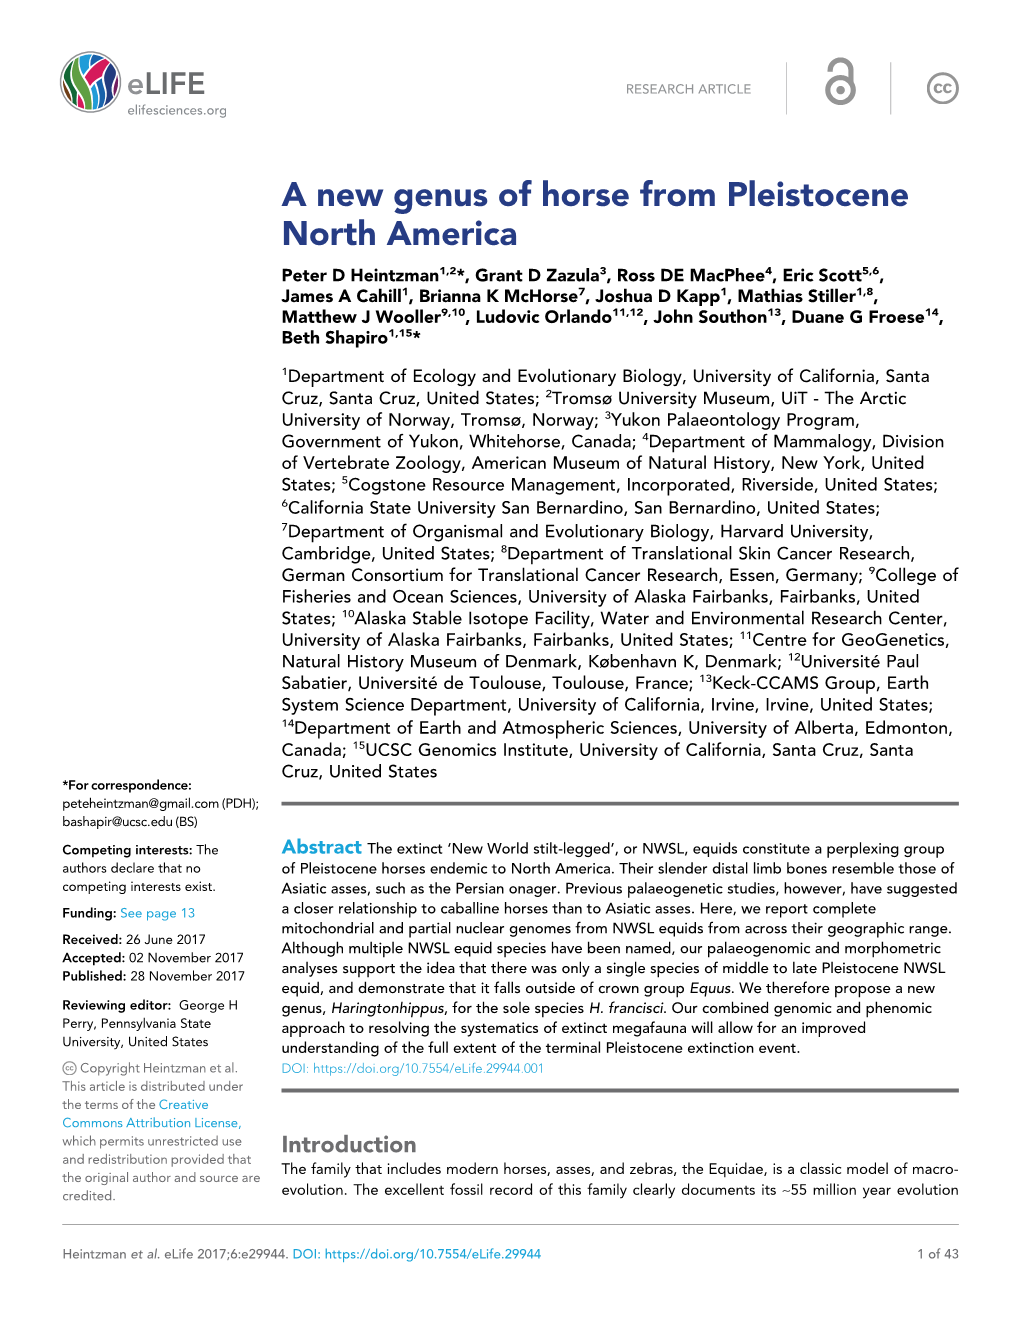 A New Genus of Horse from Pleistocene North America